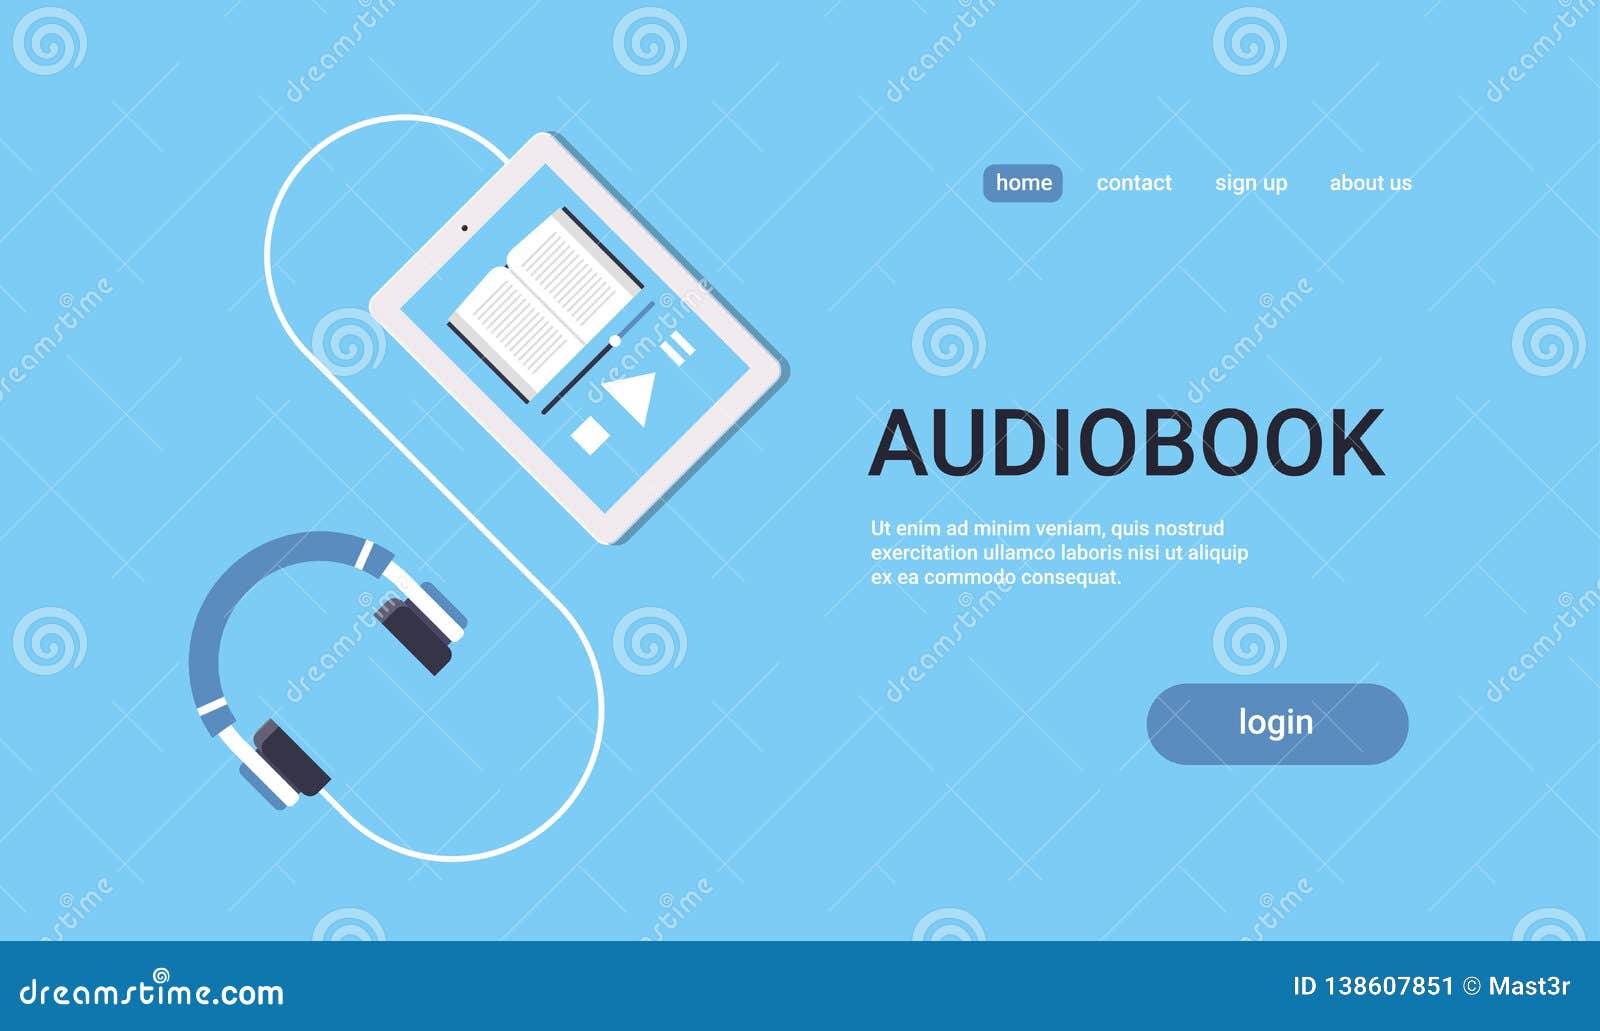 Online Audiobook Mobile Application Tablet Or Smartphone ...